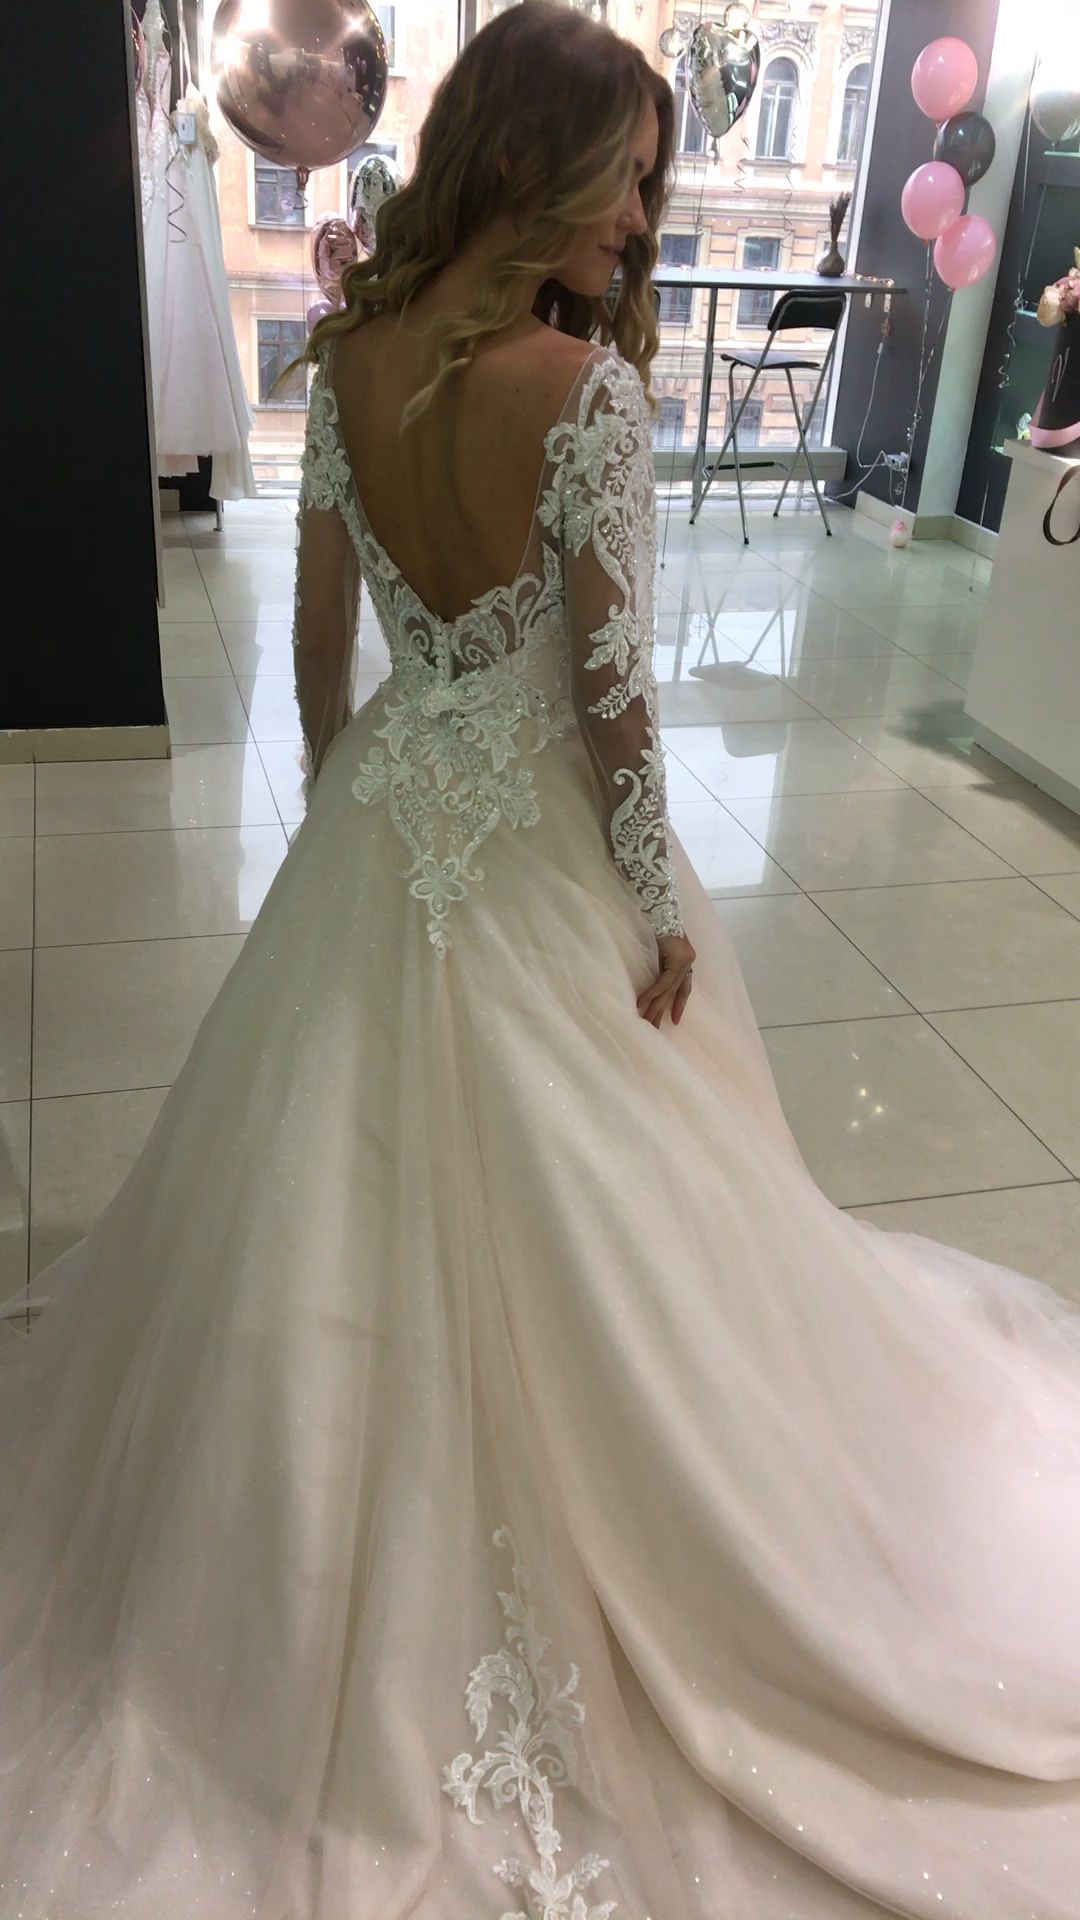 Wedding dress “Ivis” -   20 wedding dresses ideas